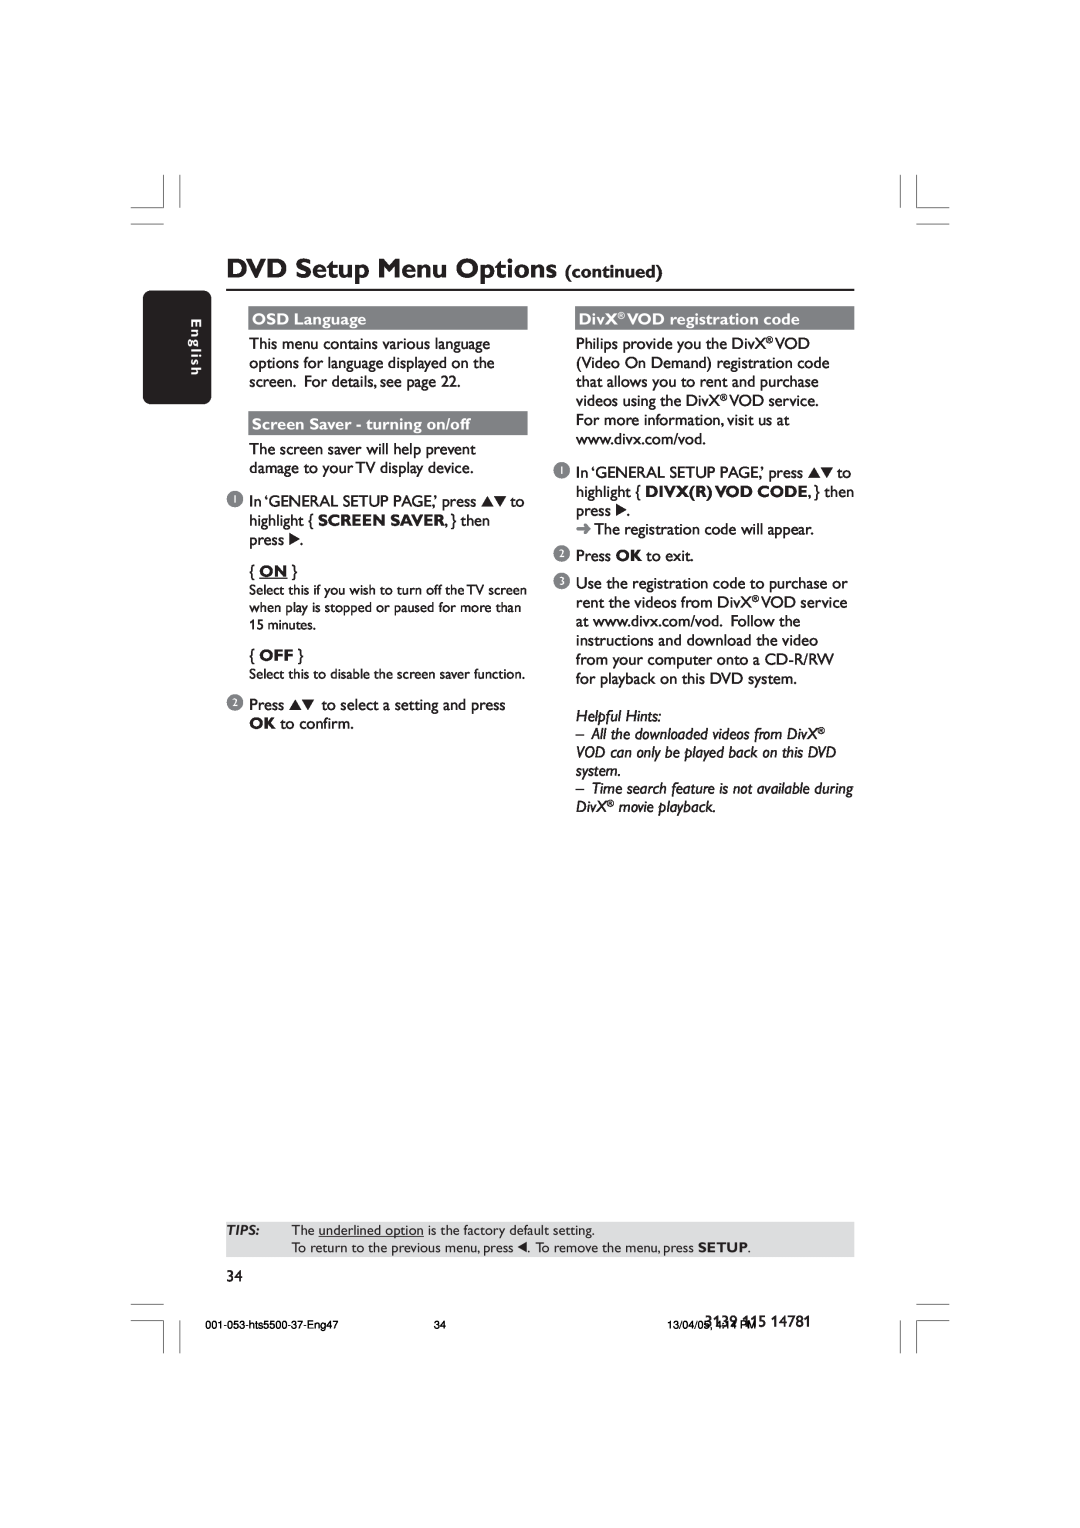 Philips HTS5500C DVD Setup Menu Options continued, OSD Language, Screen Saver - turning on/off, DivX VOD registration code 